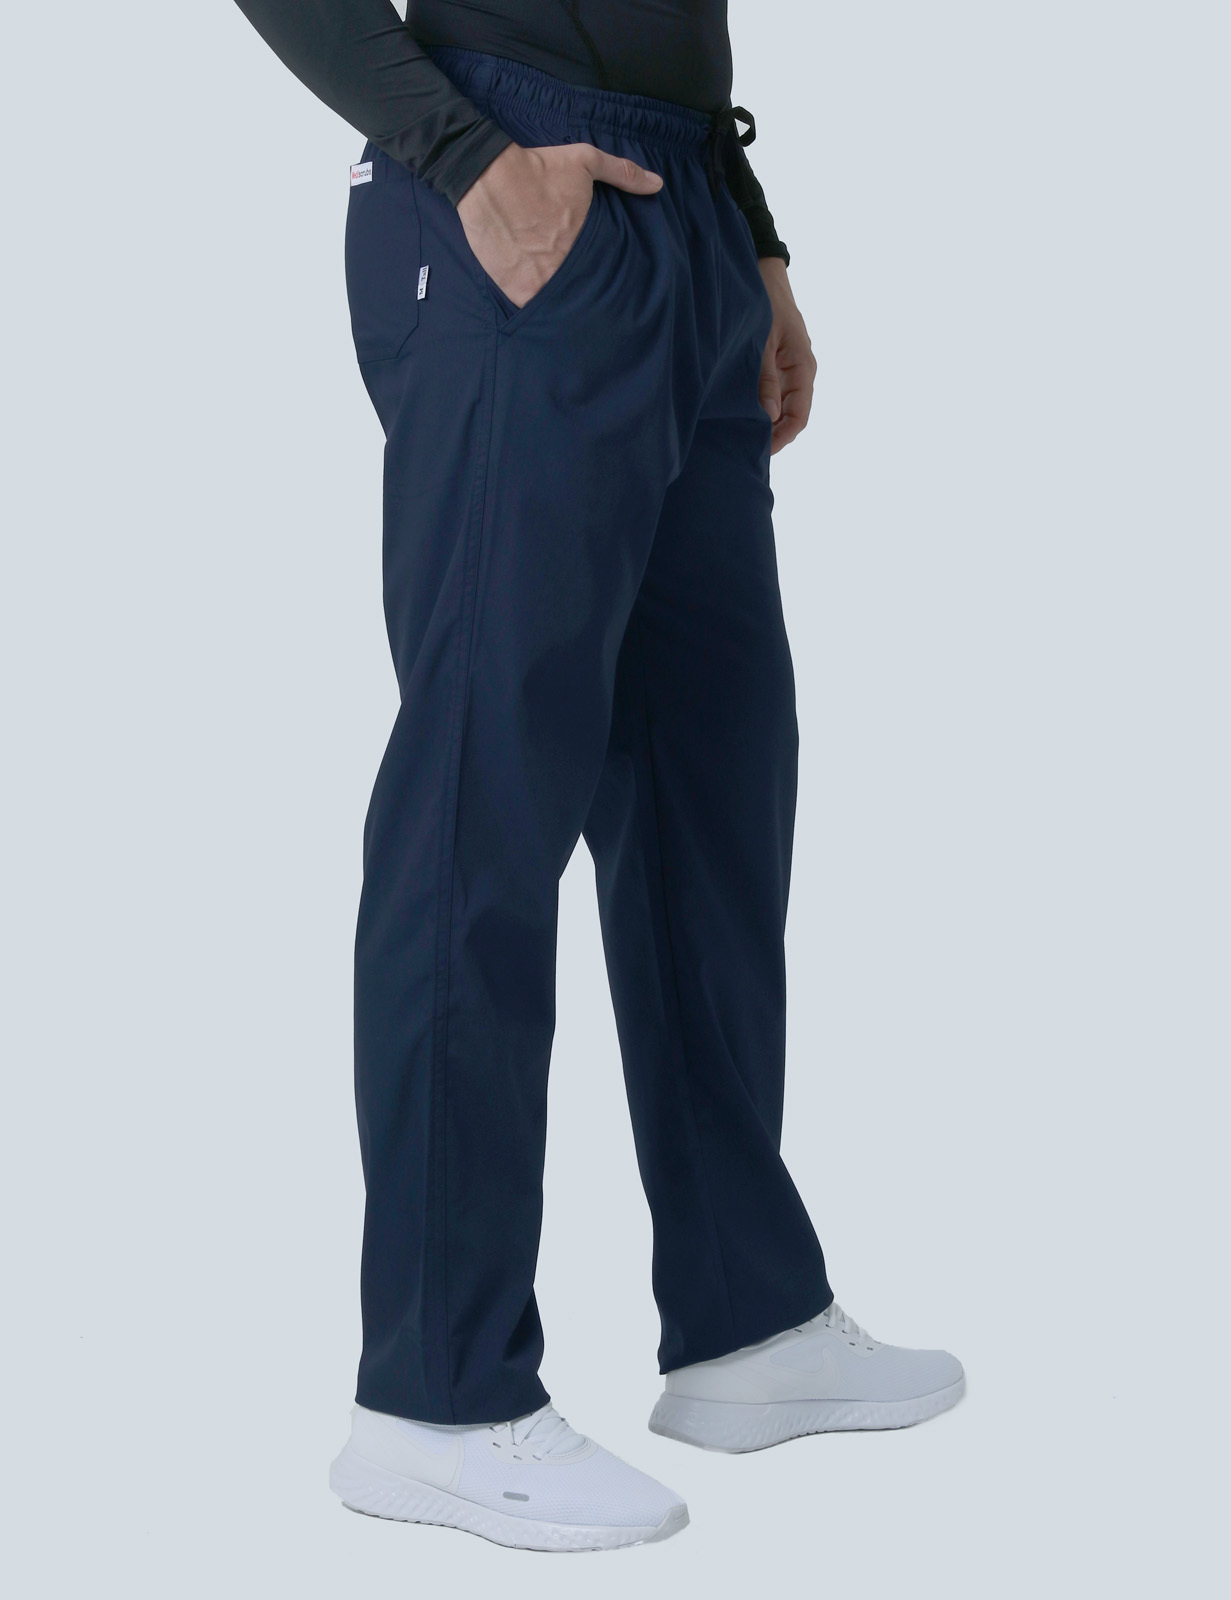 Men's Regular Cut Pants - Navy - 2X Large